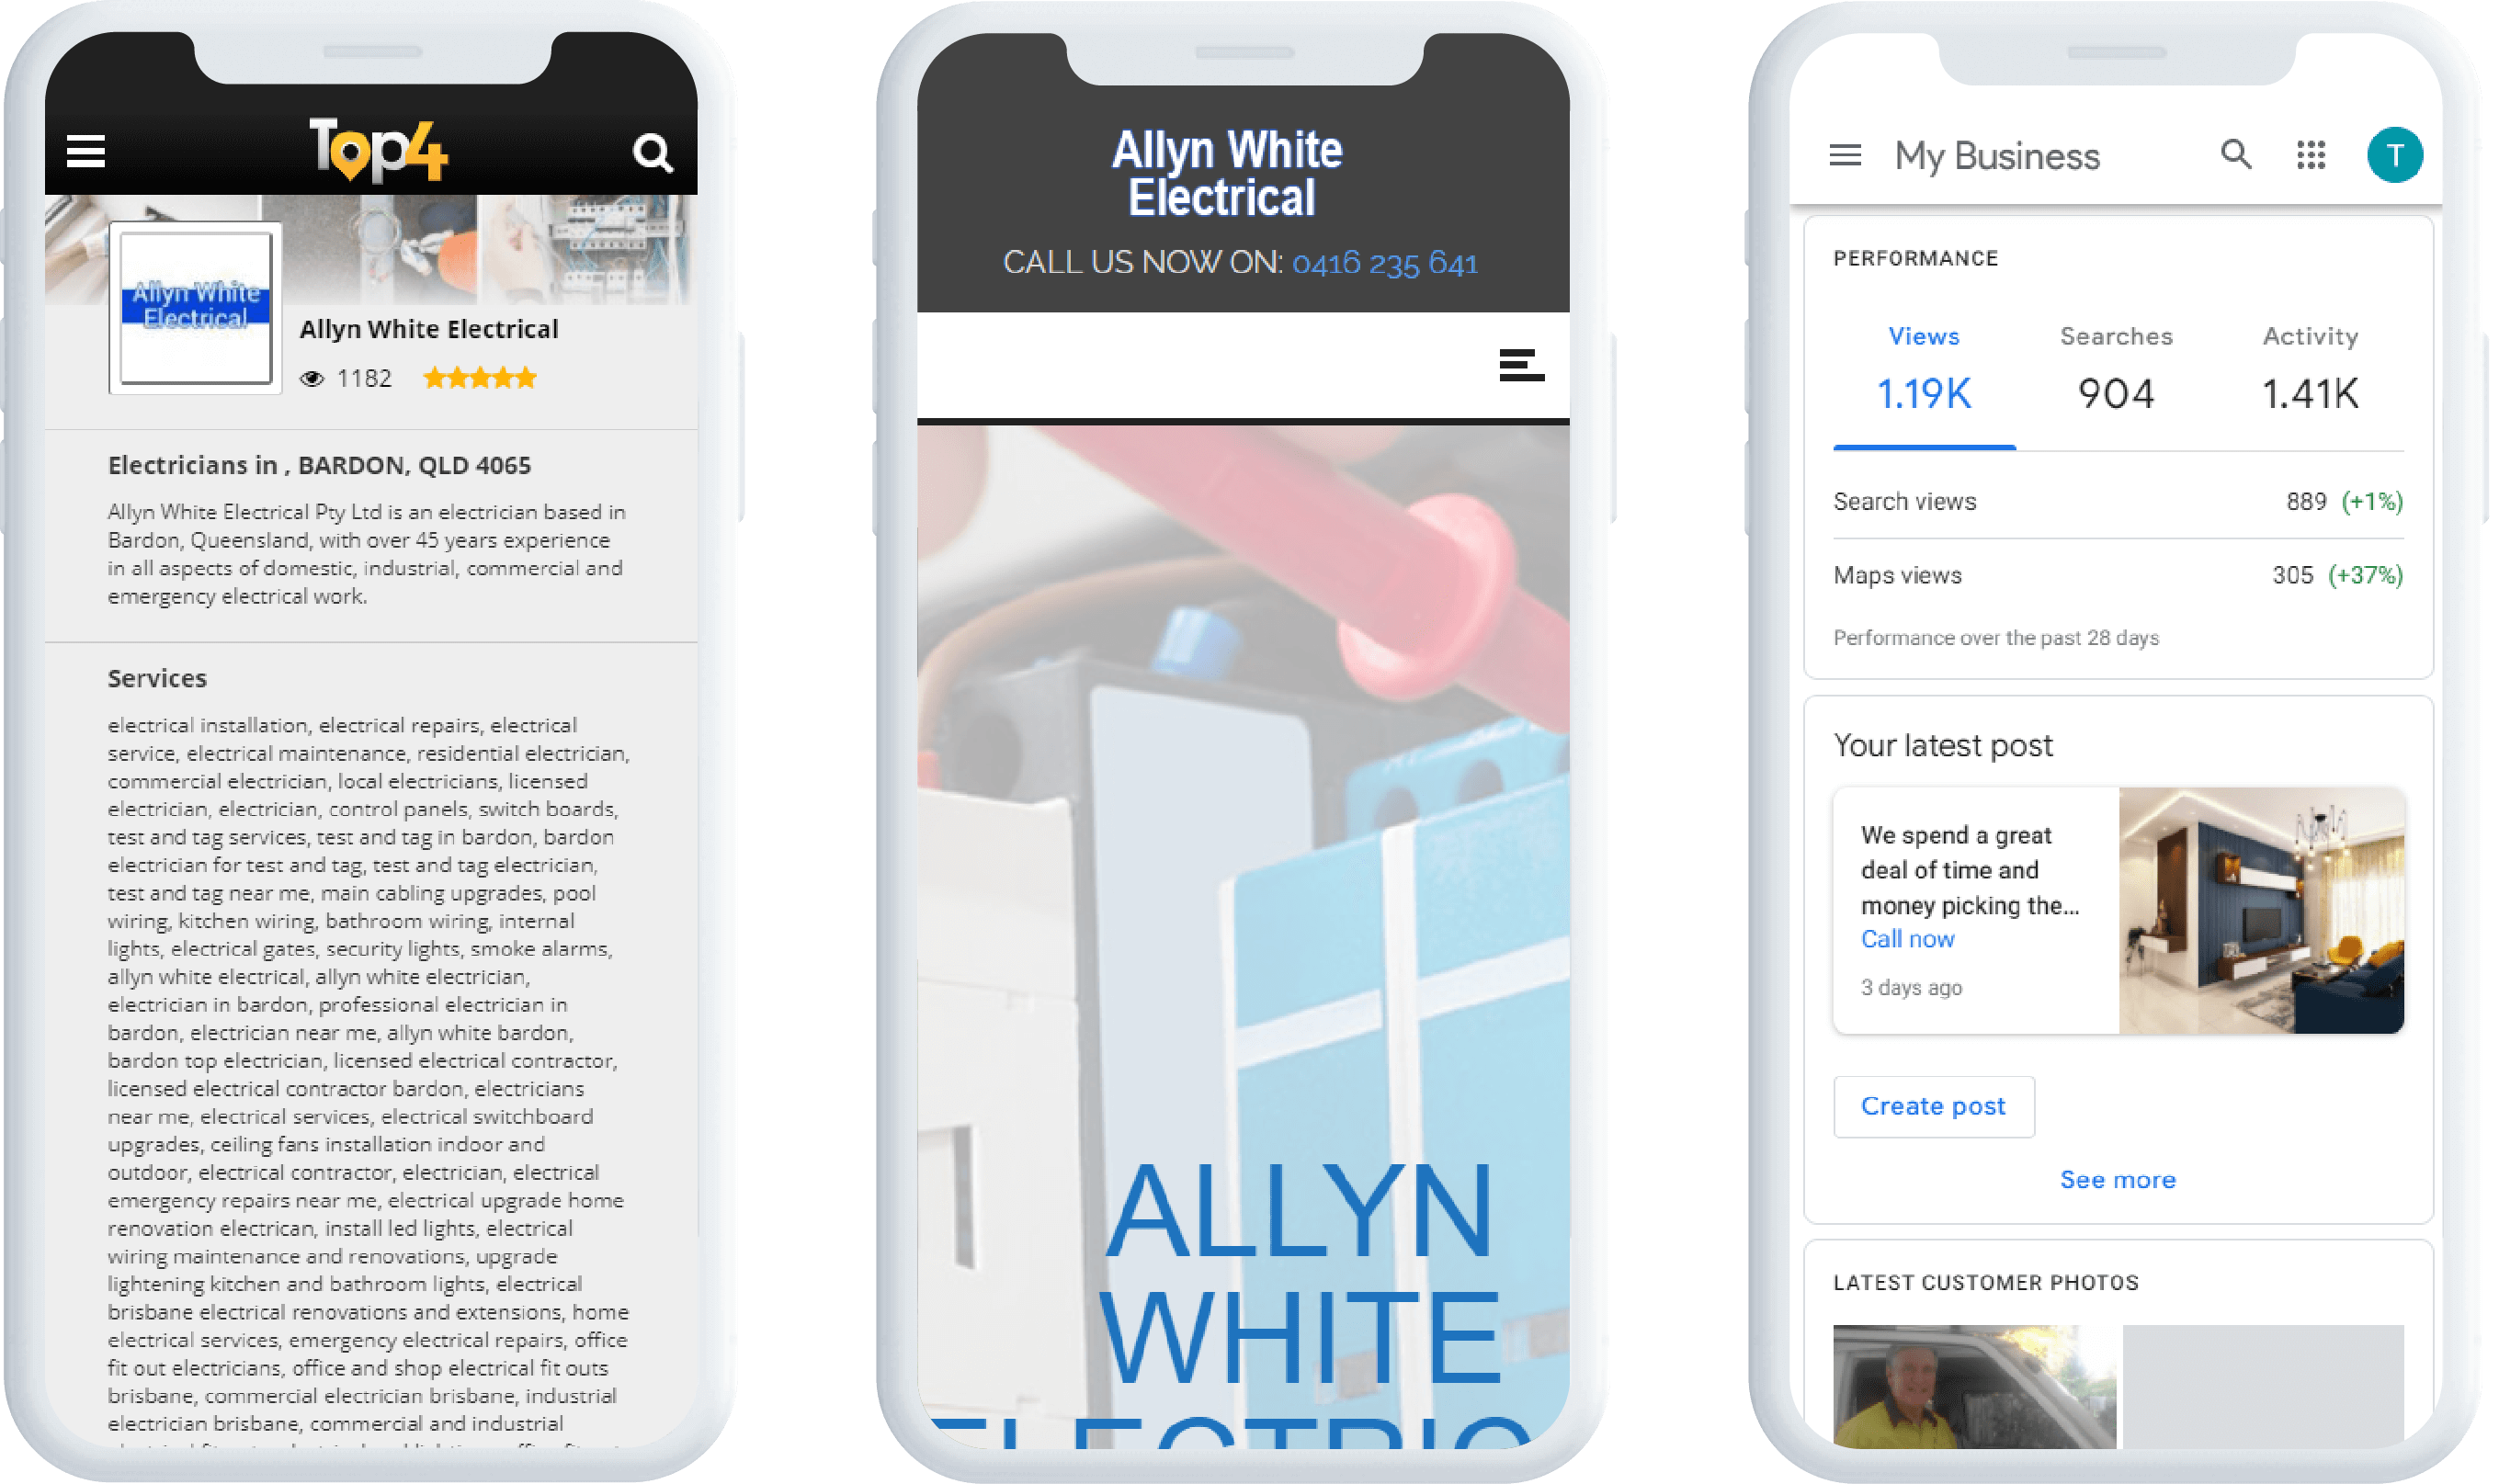 Allyn White Electrical